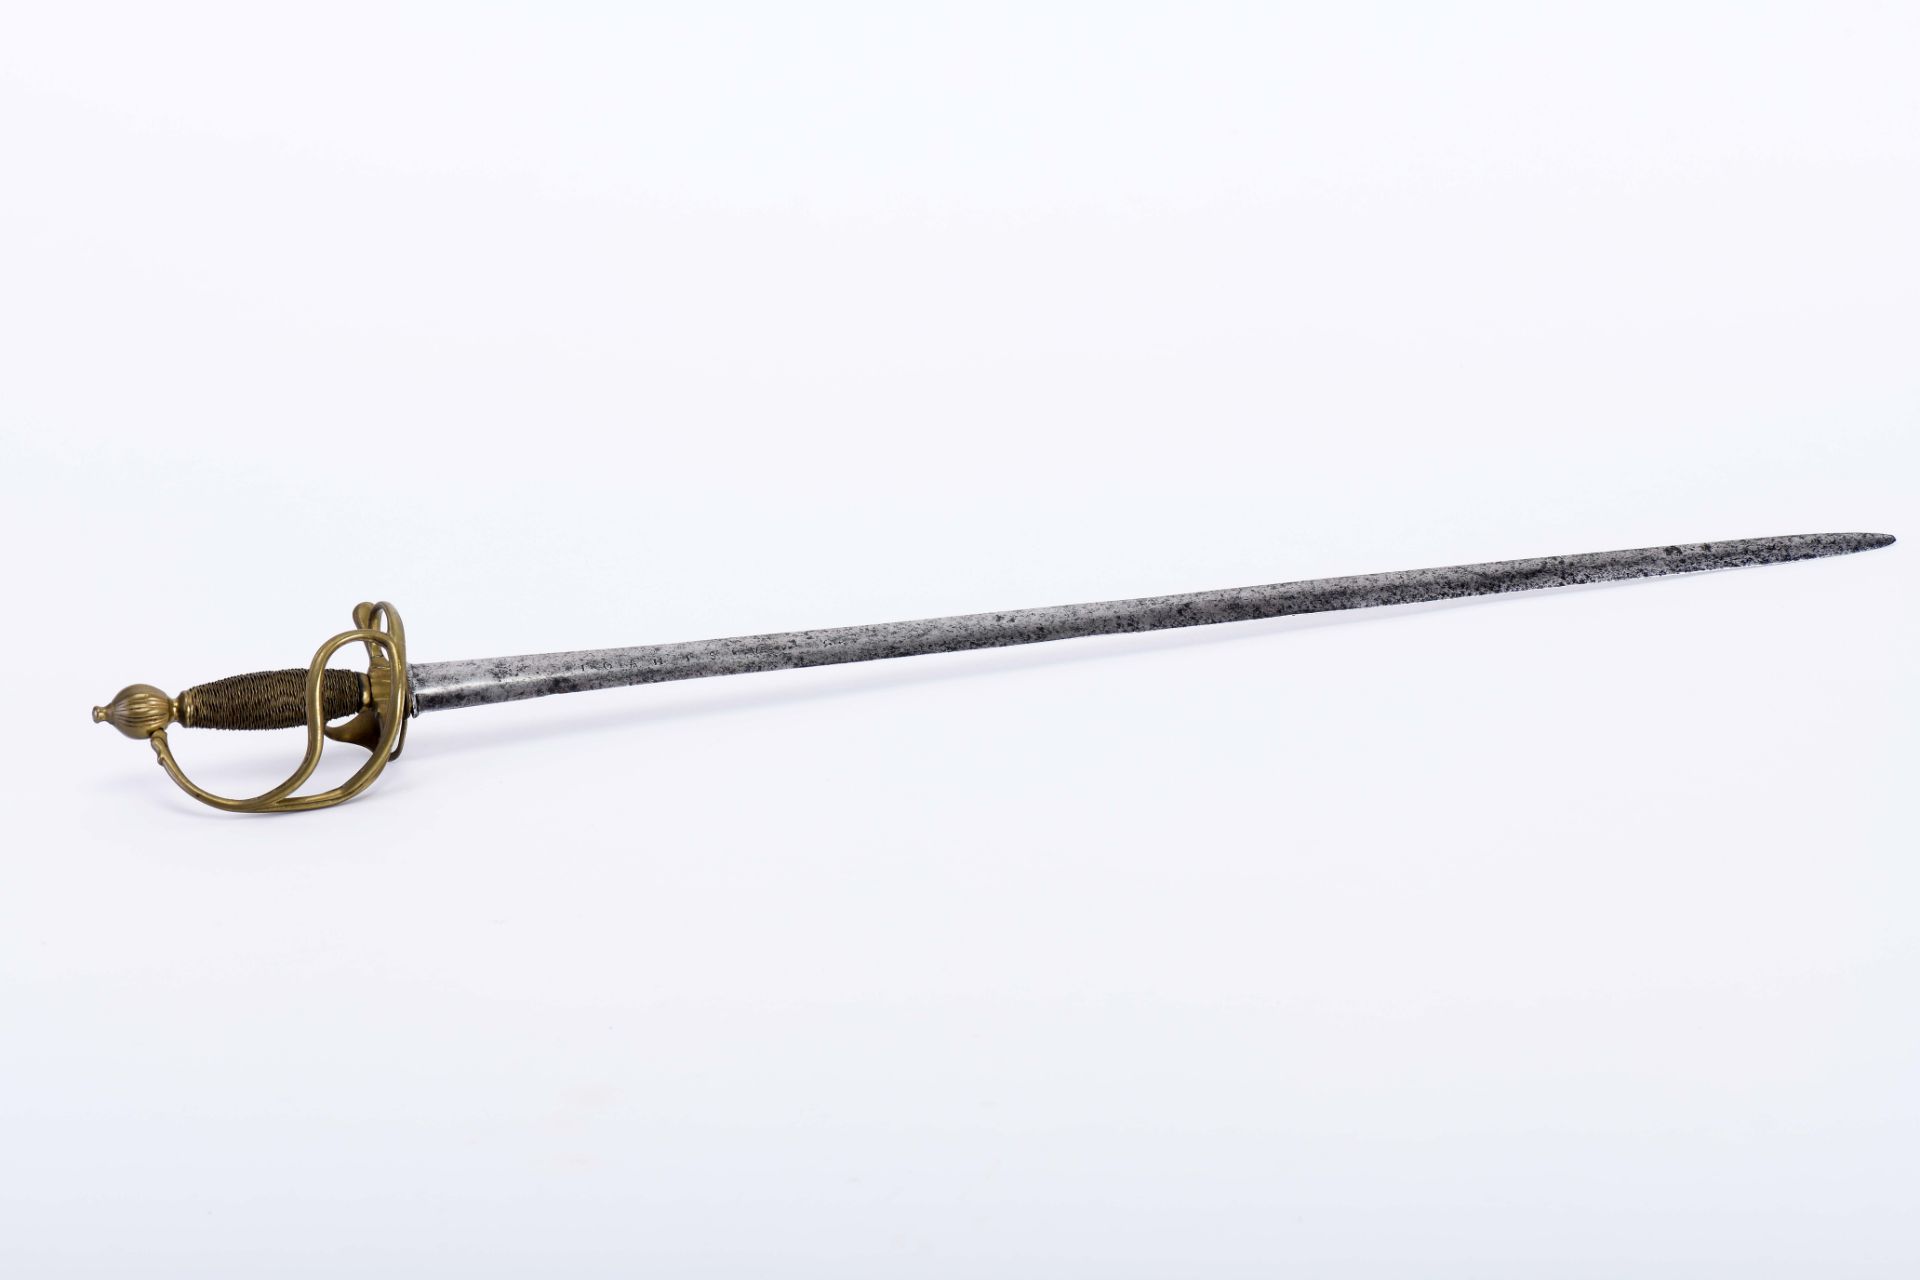 A Cavalry sword